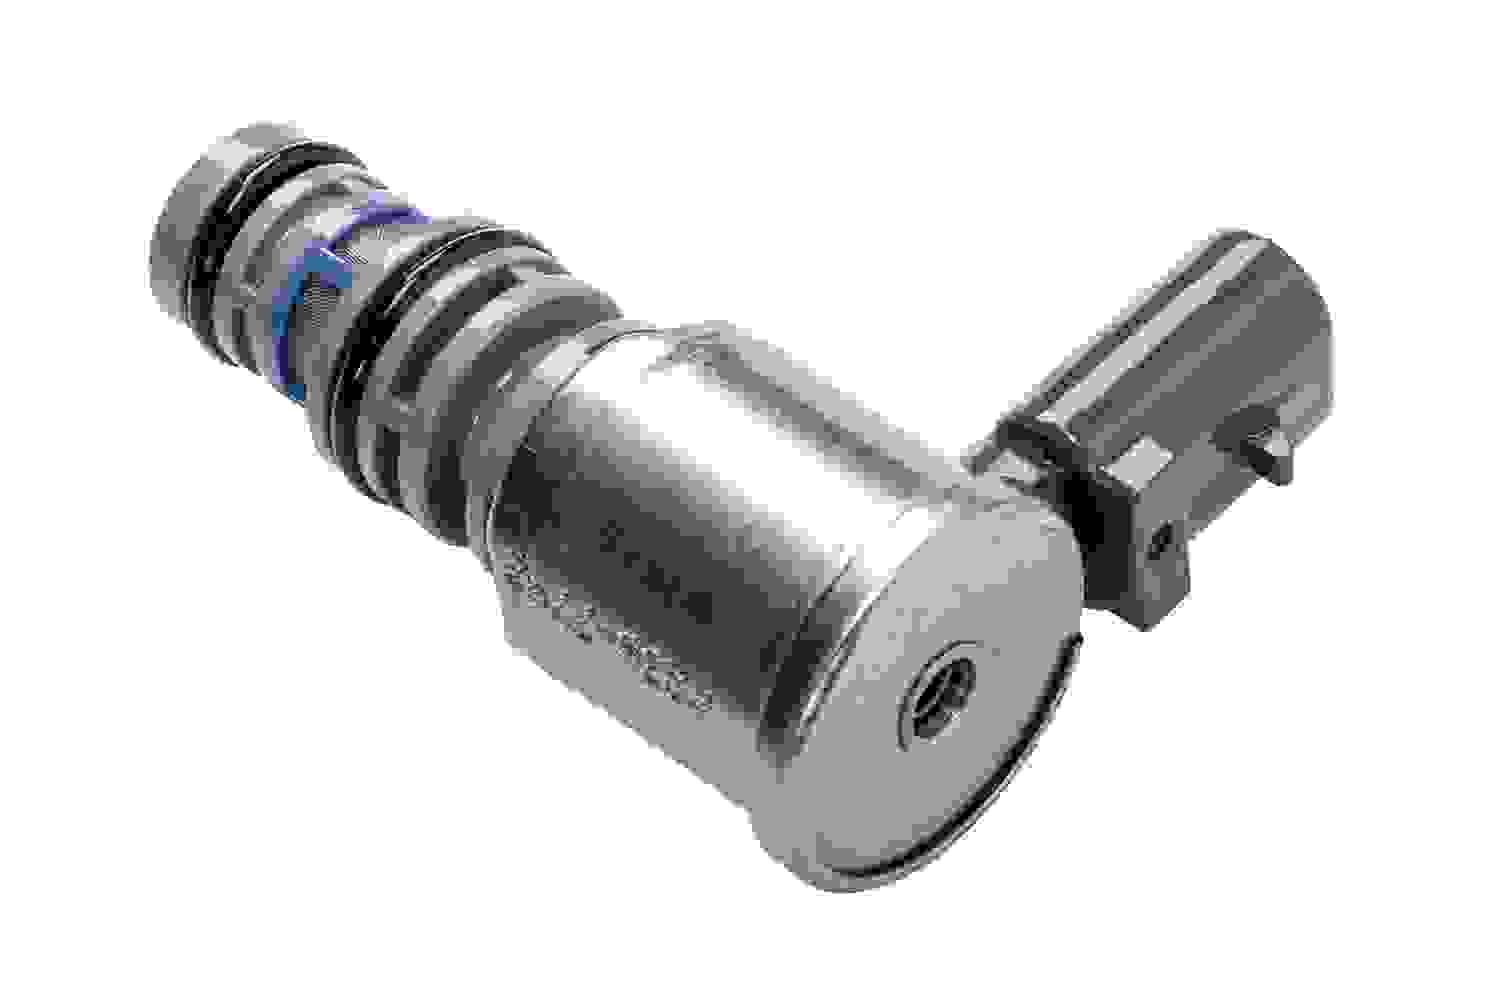 GM GENUINE PARTS - Automatic Transmission Torque Converter Clutch Solenoid - GMP 24227792